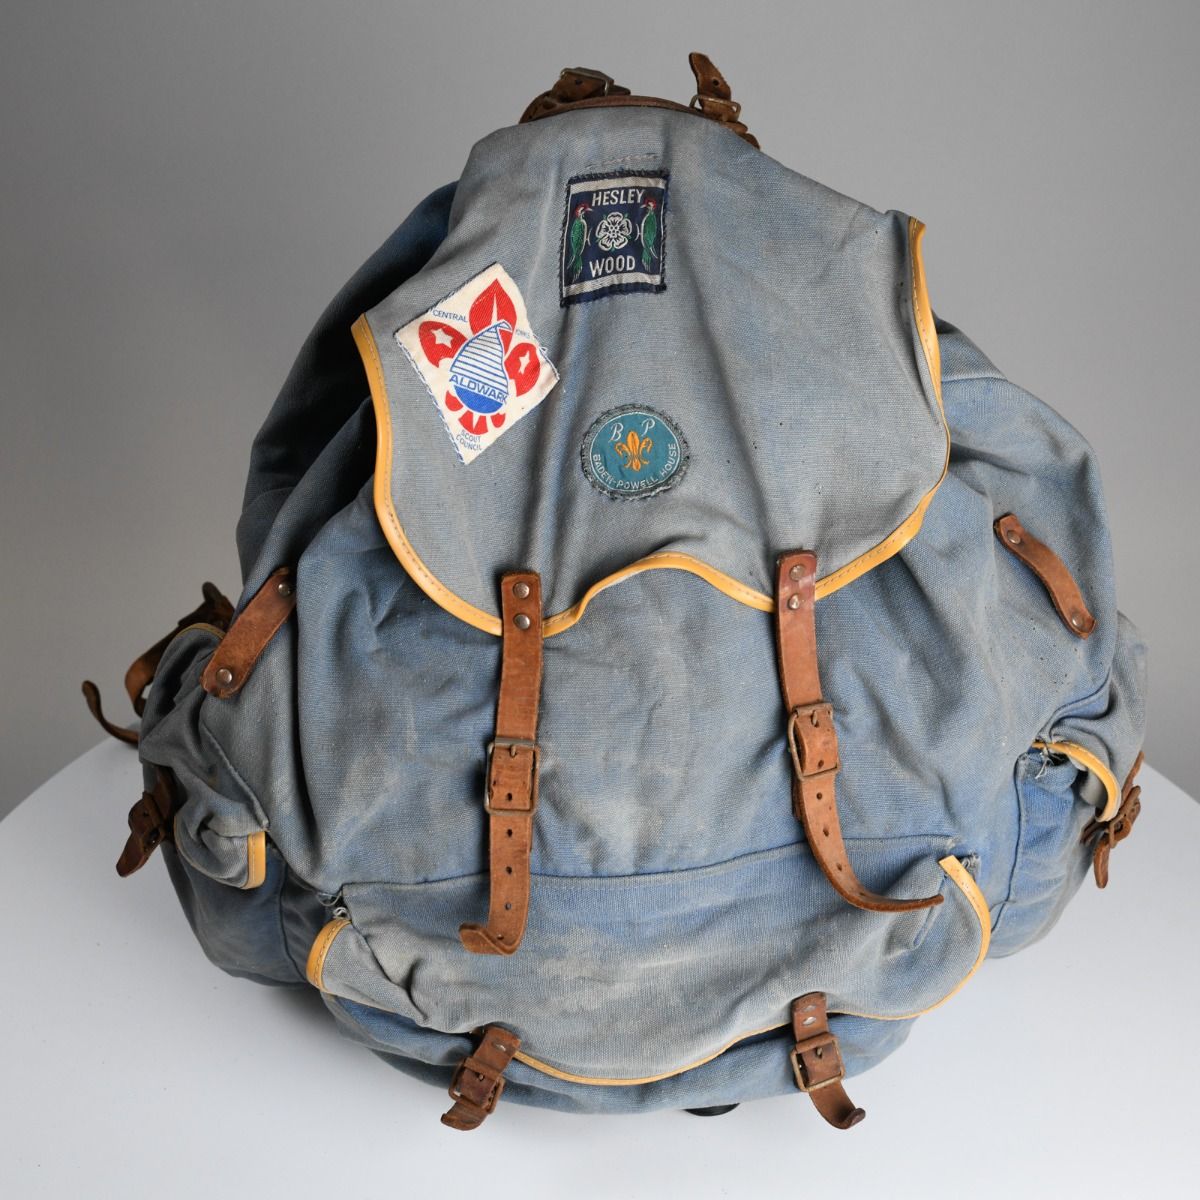 Vintage Relum 1960s Hiking Backpack Rucksack